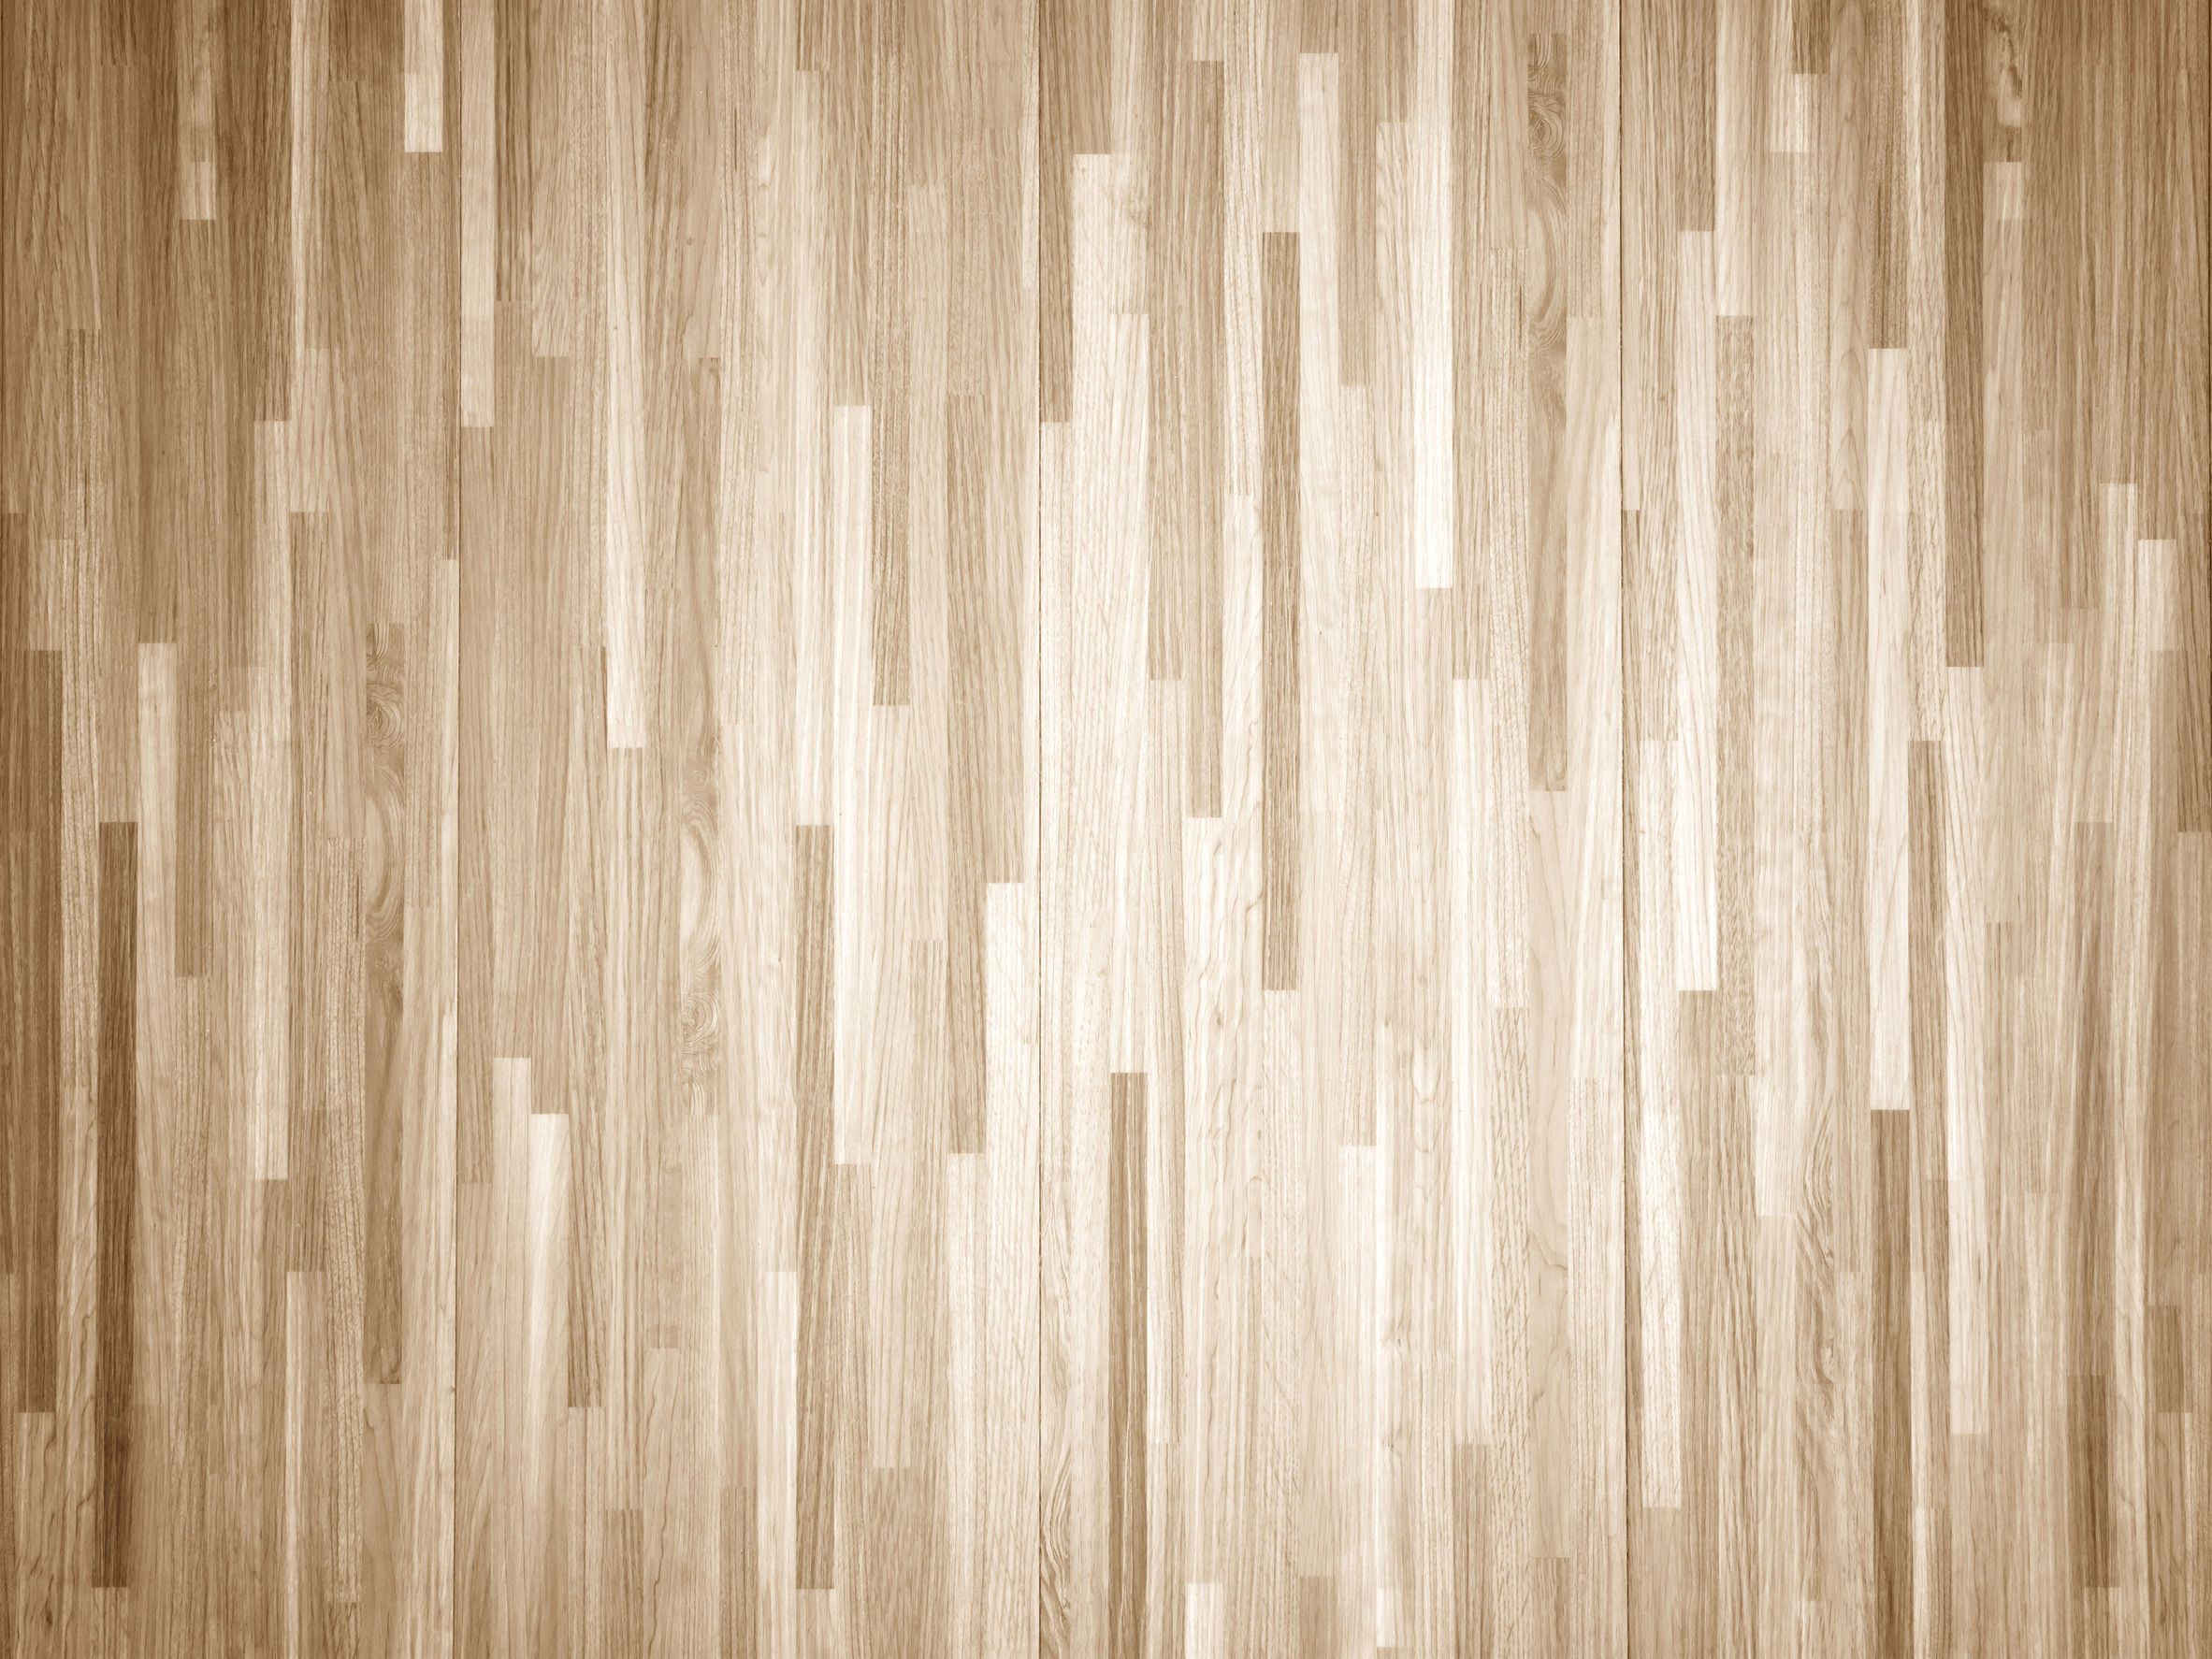 hardwood floor refinishing materials of how to chemically strip wood floors woodfloordoctor com inside you